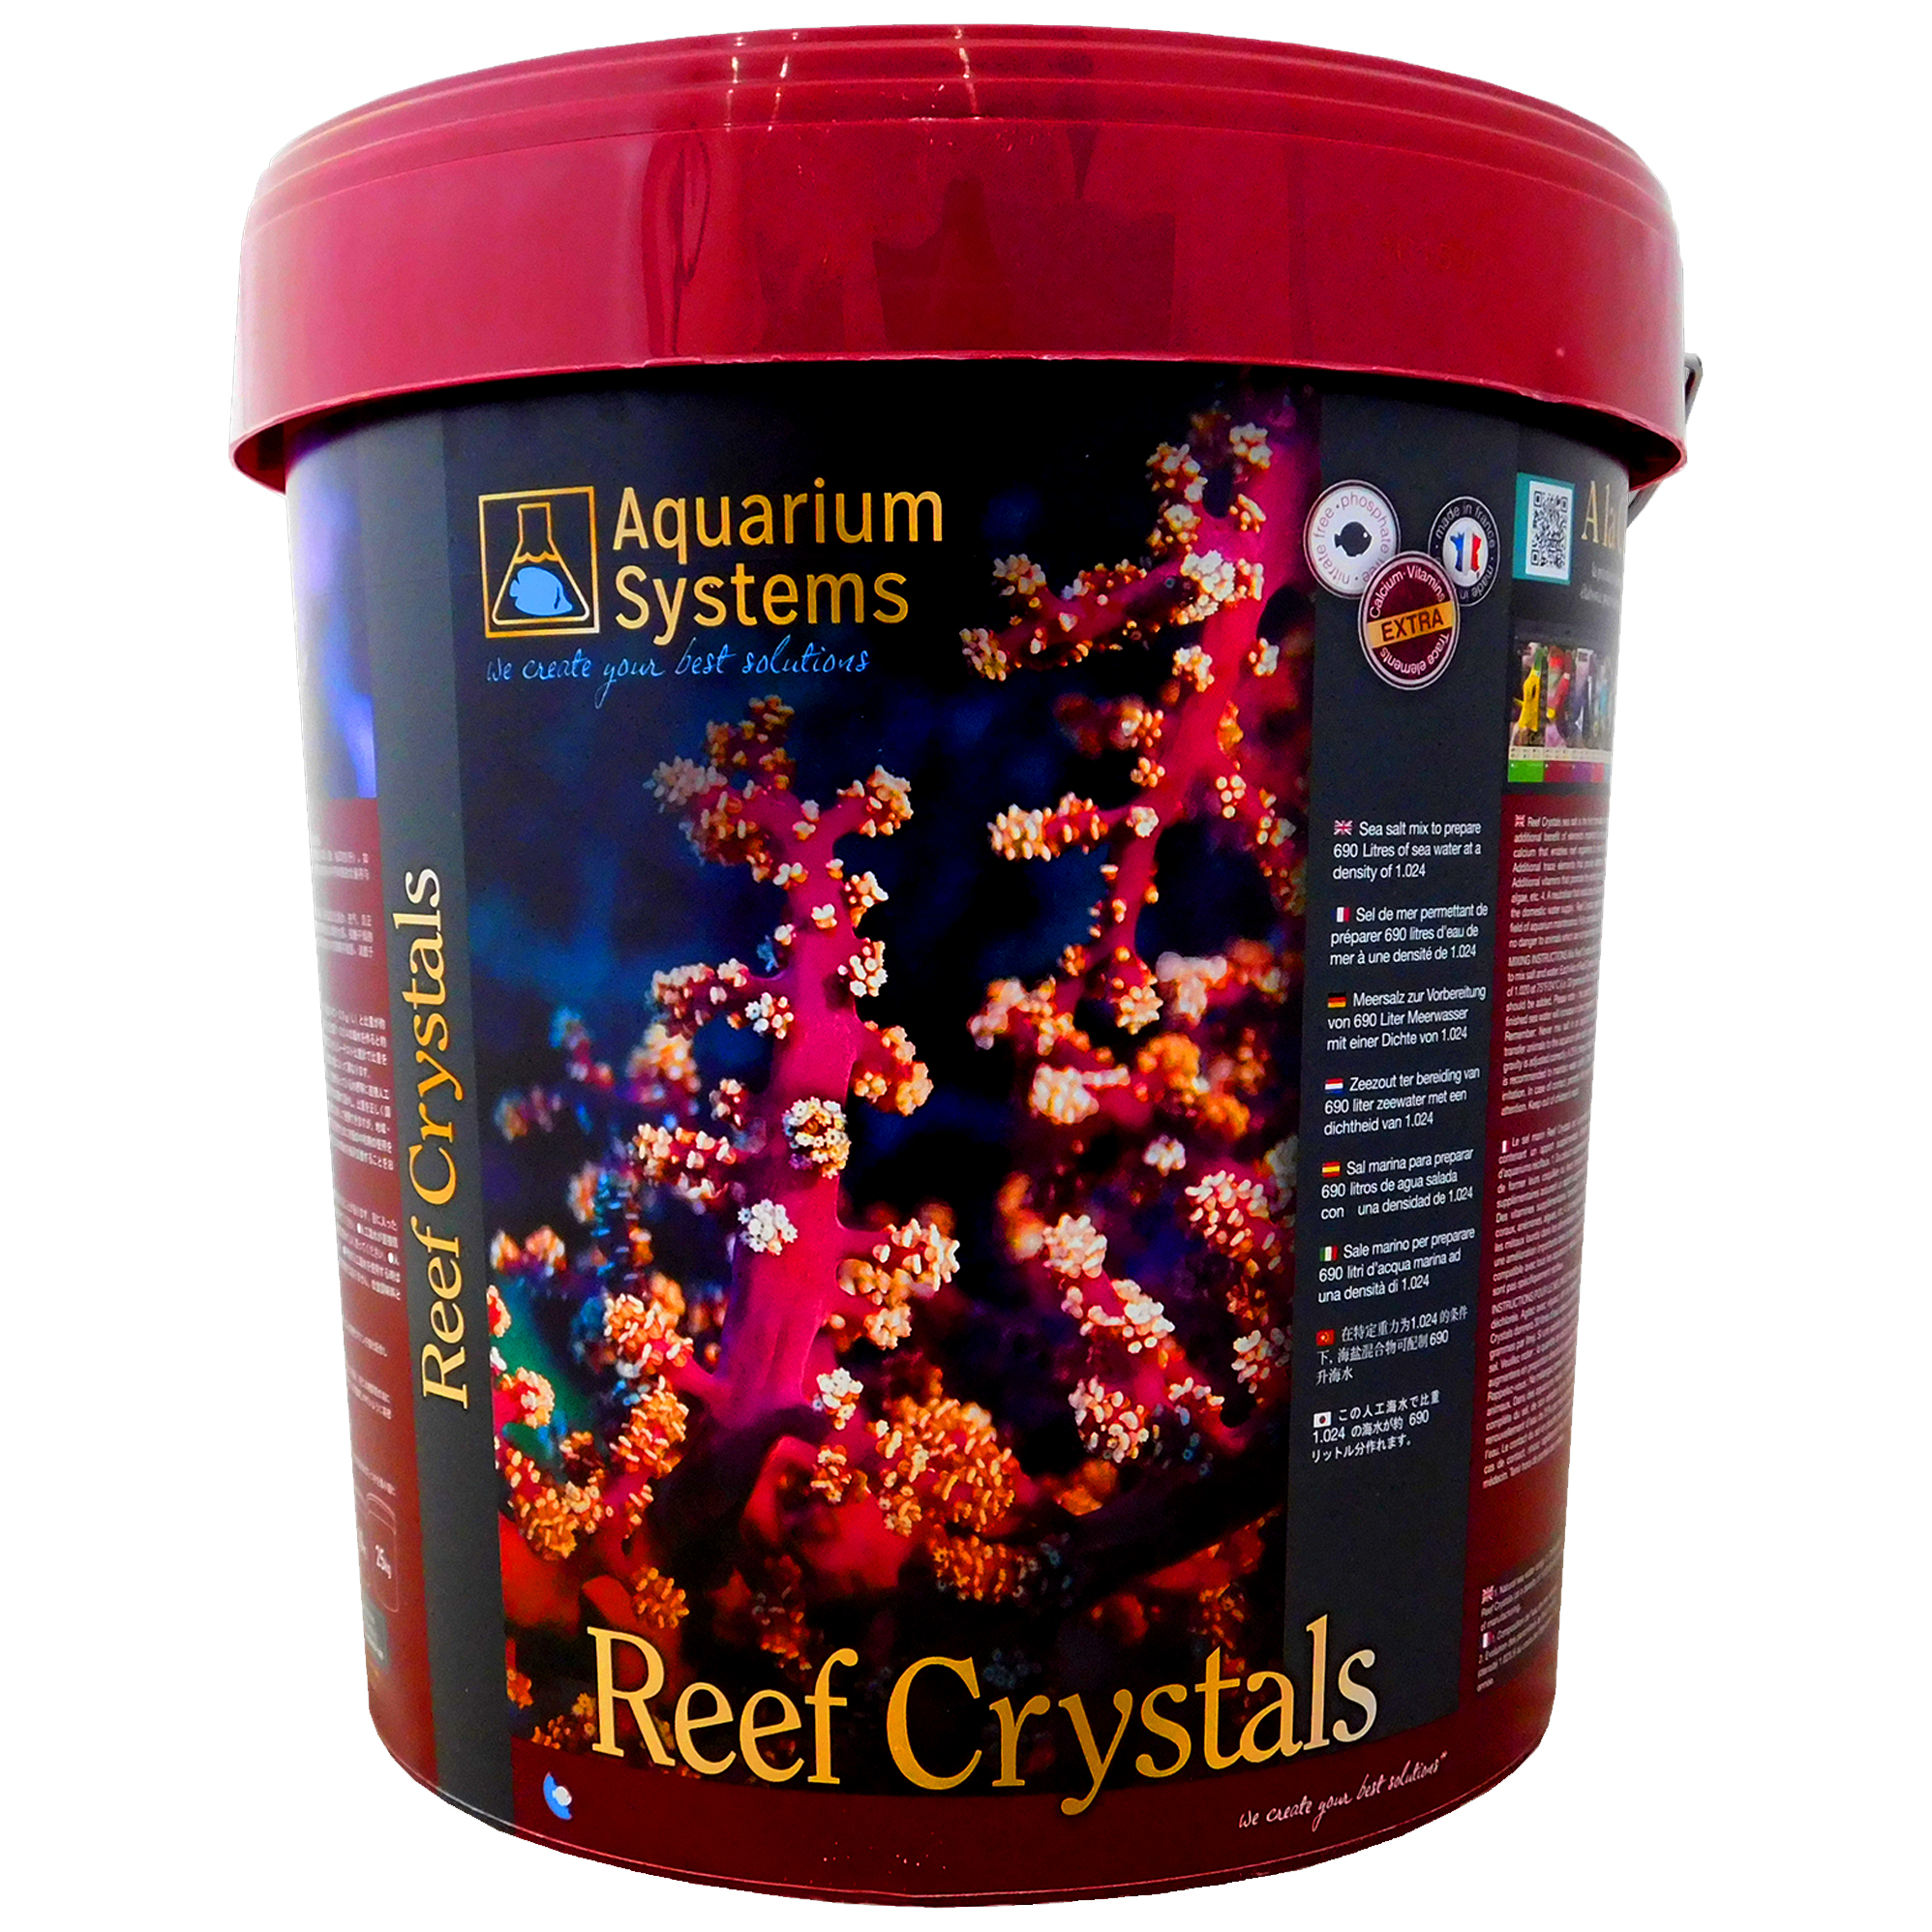 Coral system. Соль риф Кристалл для морского аквариума. Reef Crystals соль для морских аквариумов. Морская соль коралловый риф. Crystal Aqua.